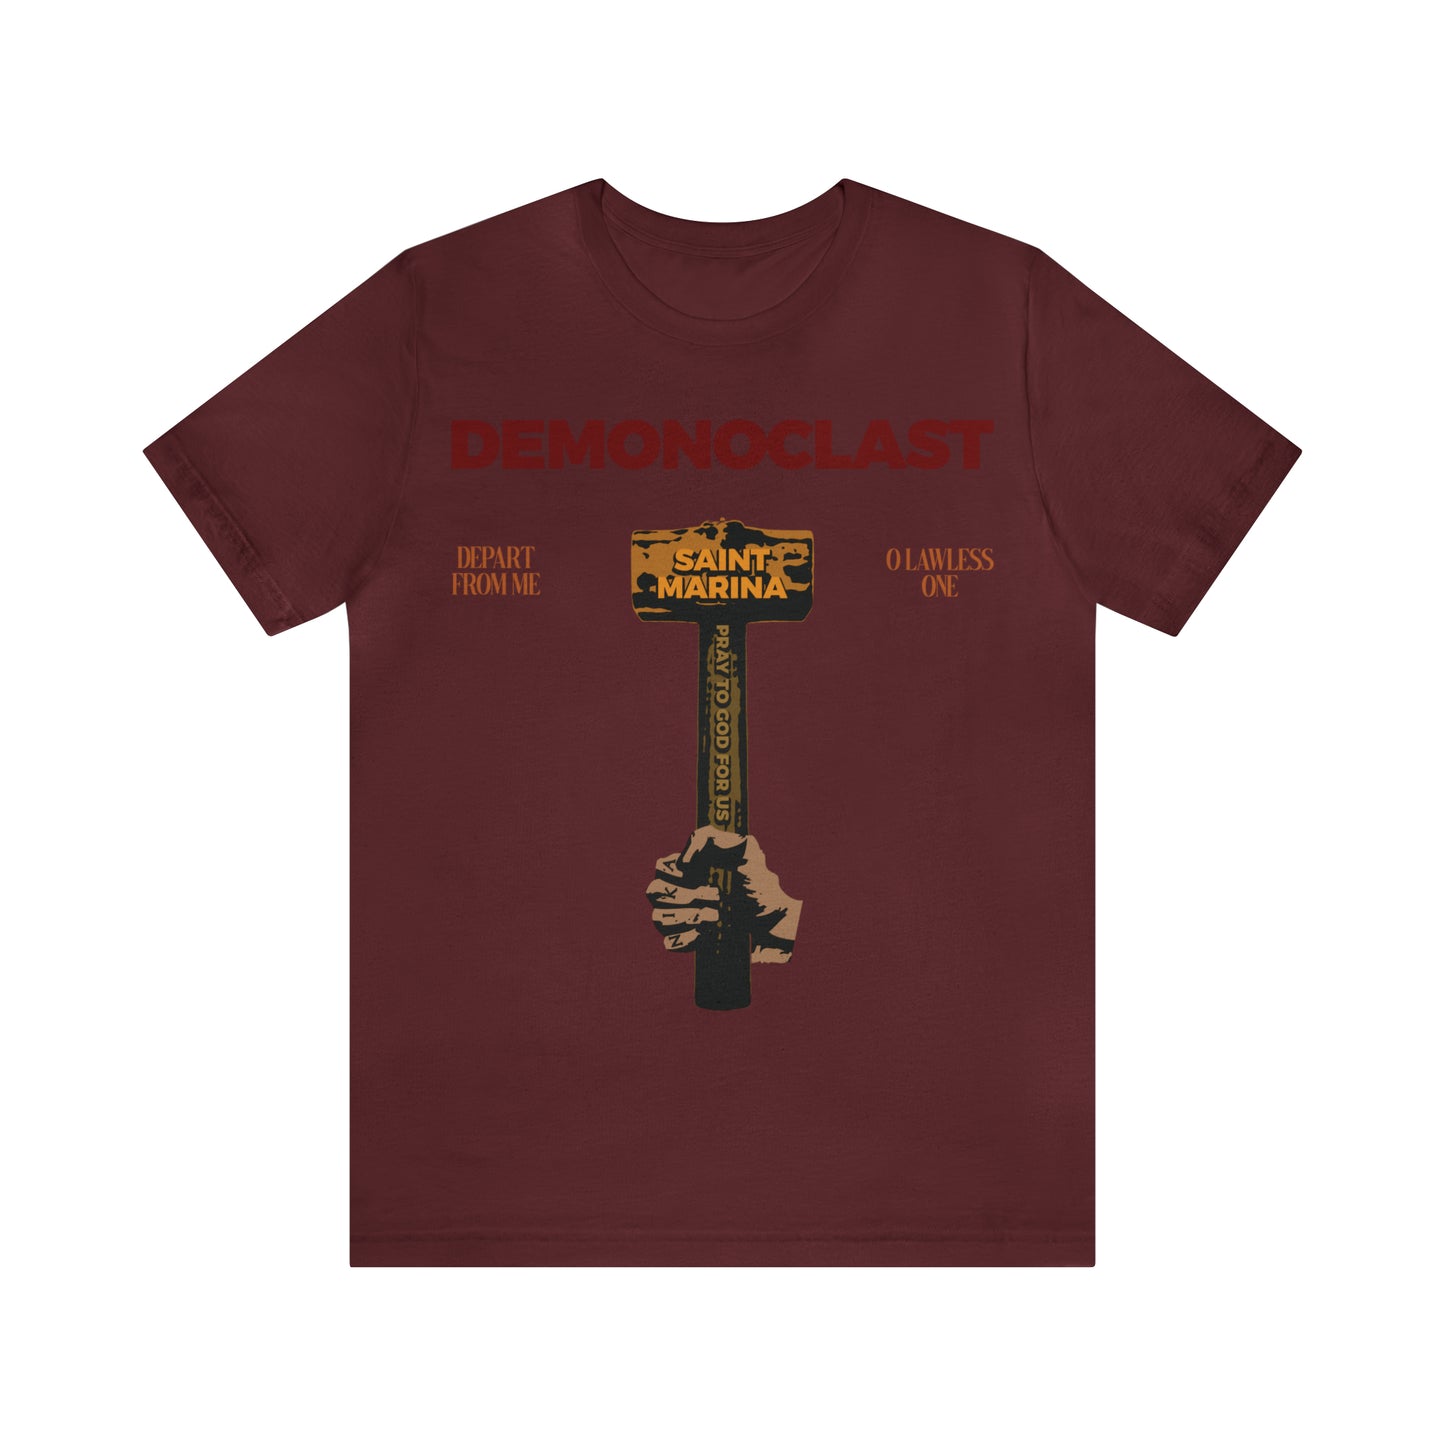 Demonoclast No. 1 (St. Marina's Hammer) | Orthodox Christian T-Shirt